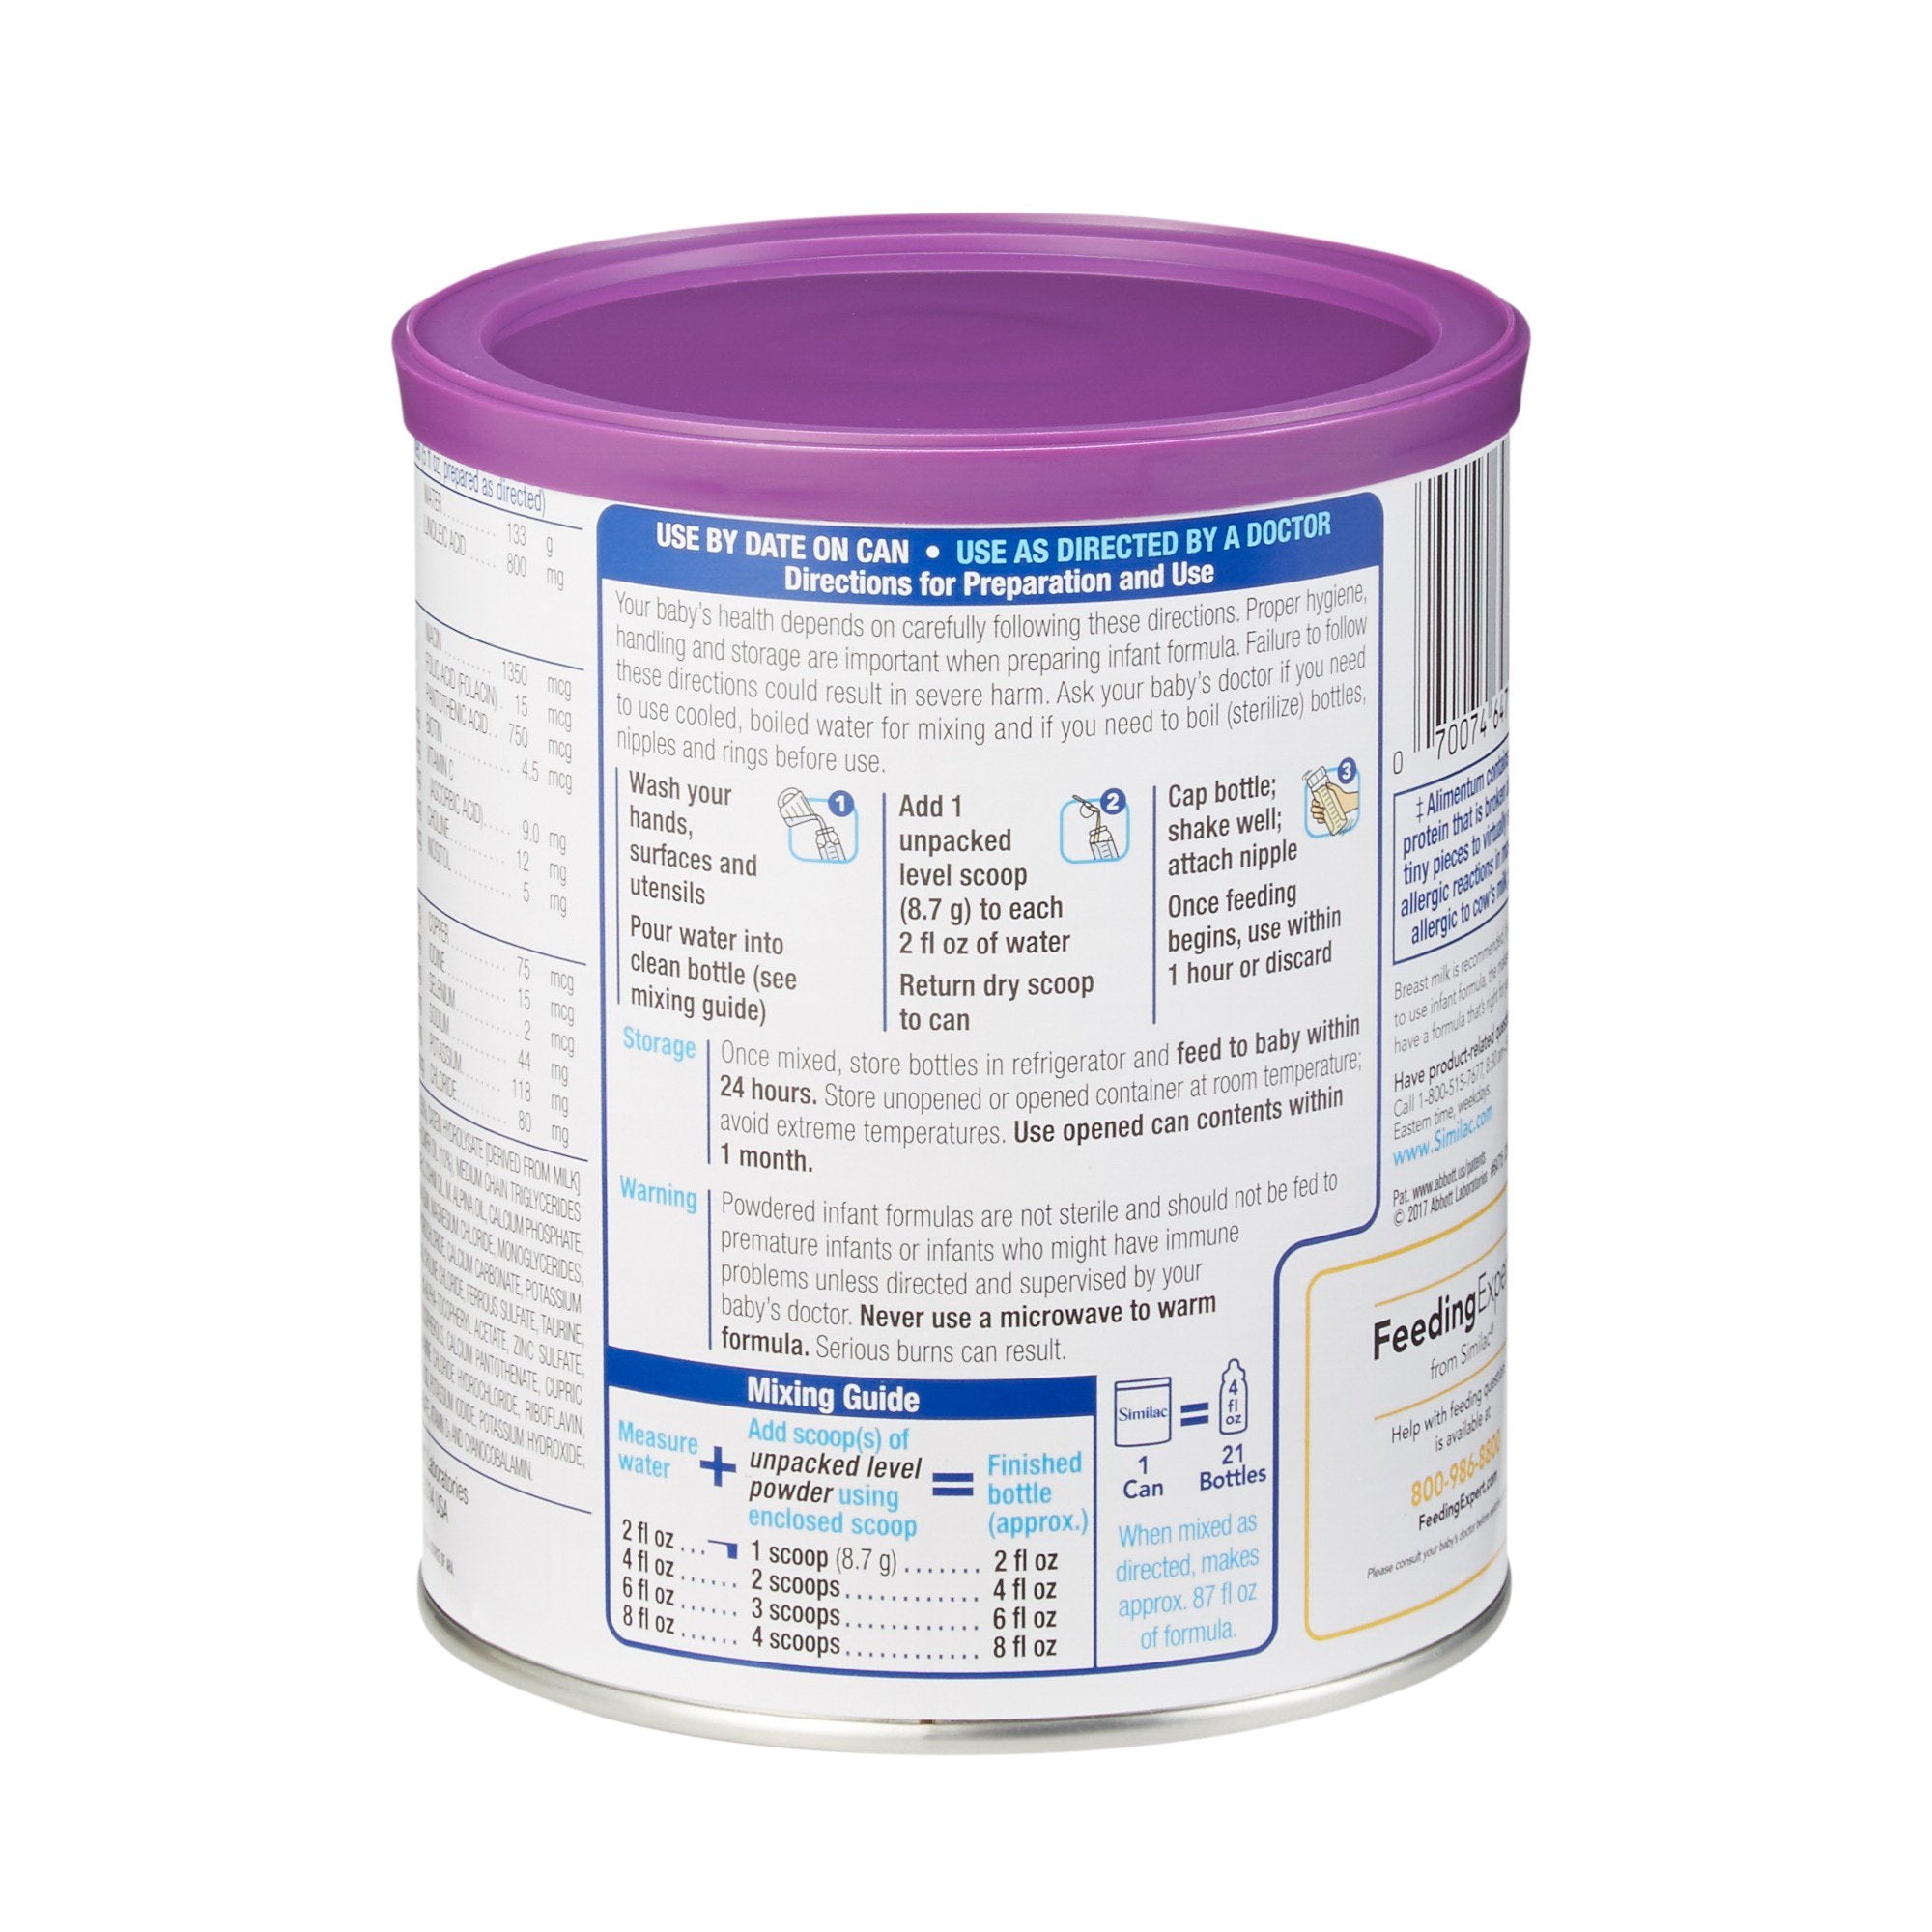 Similac® Alimentum® Infant Formula, 12.1-ounce can